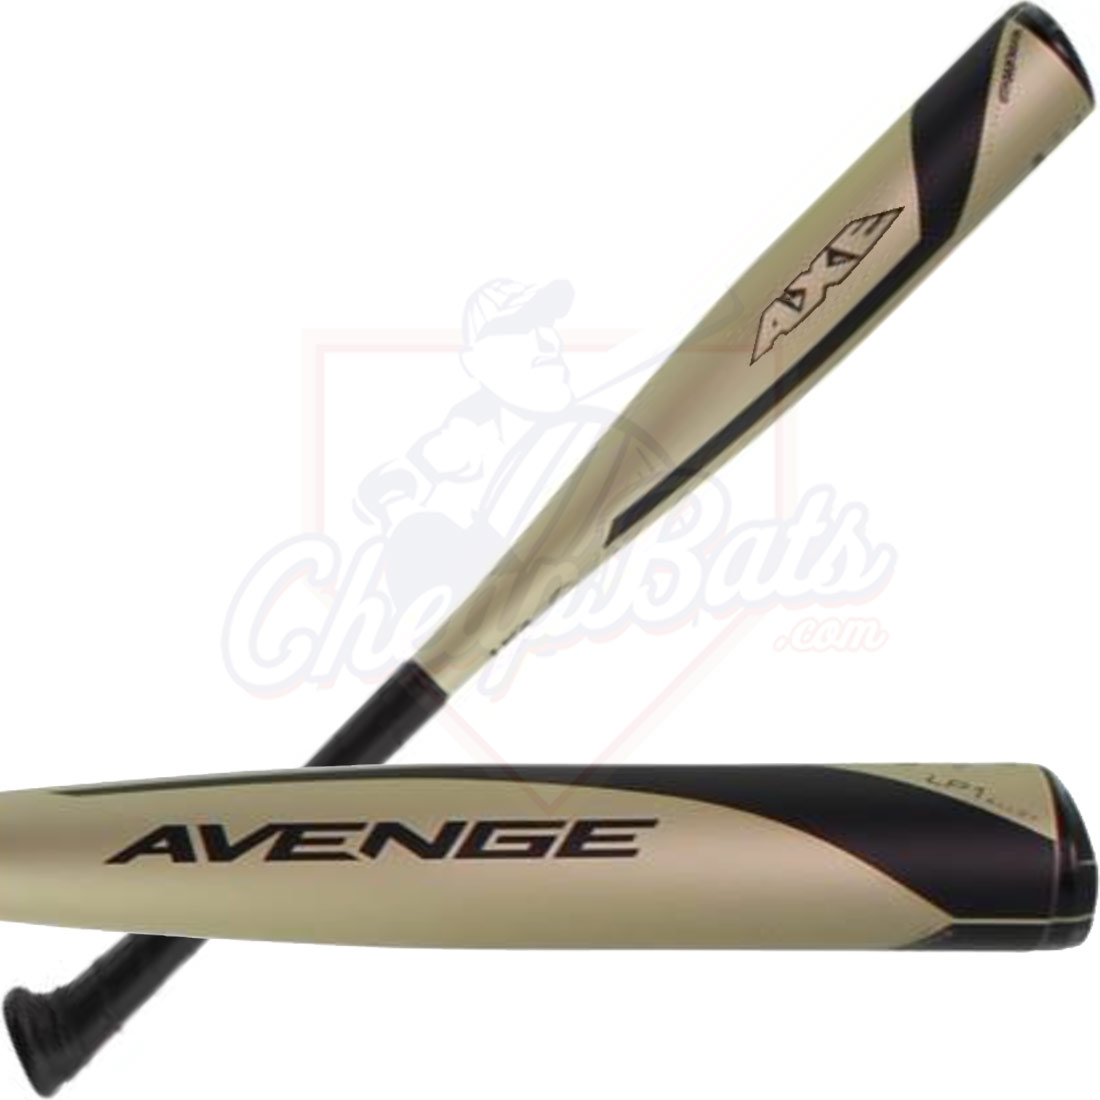 2021 Axe Avenge Youth USA Tee Ball Bat -11oz L166H